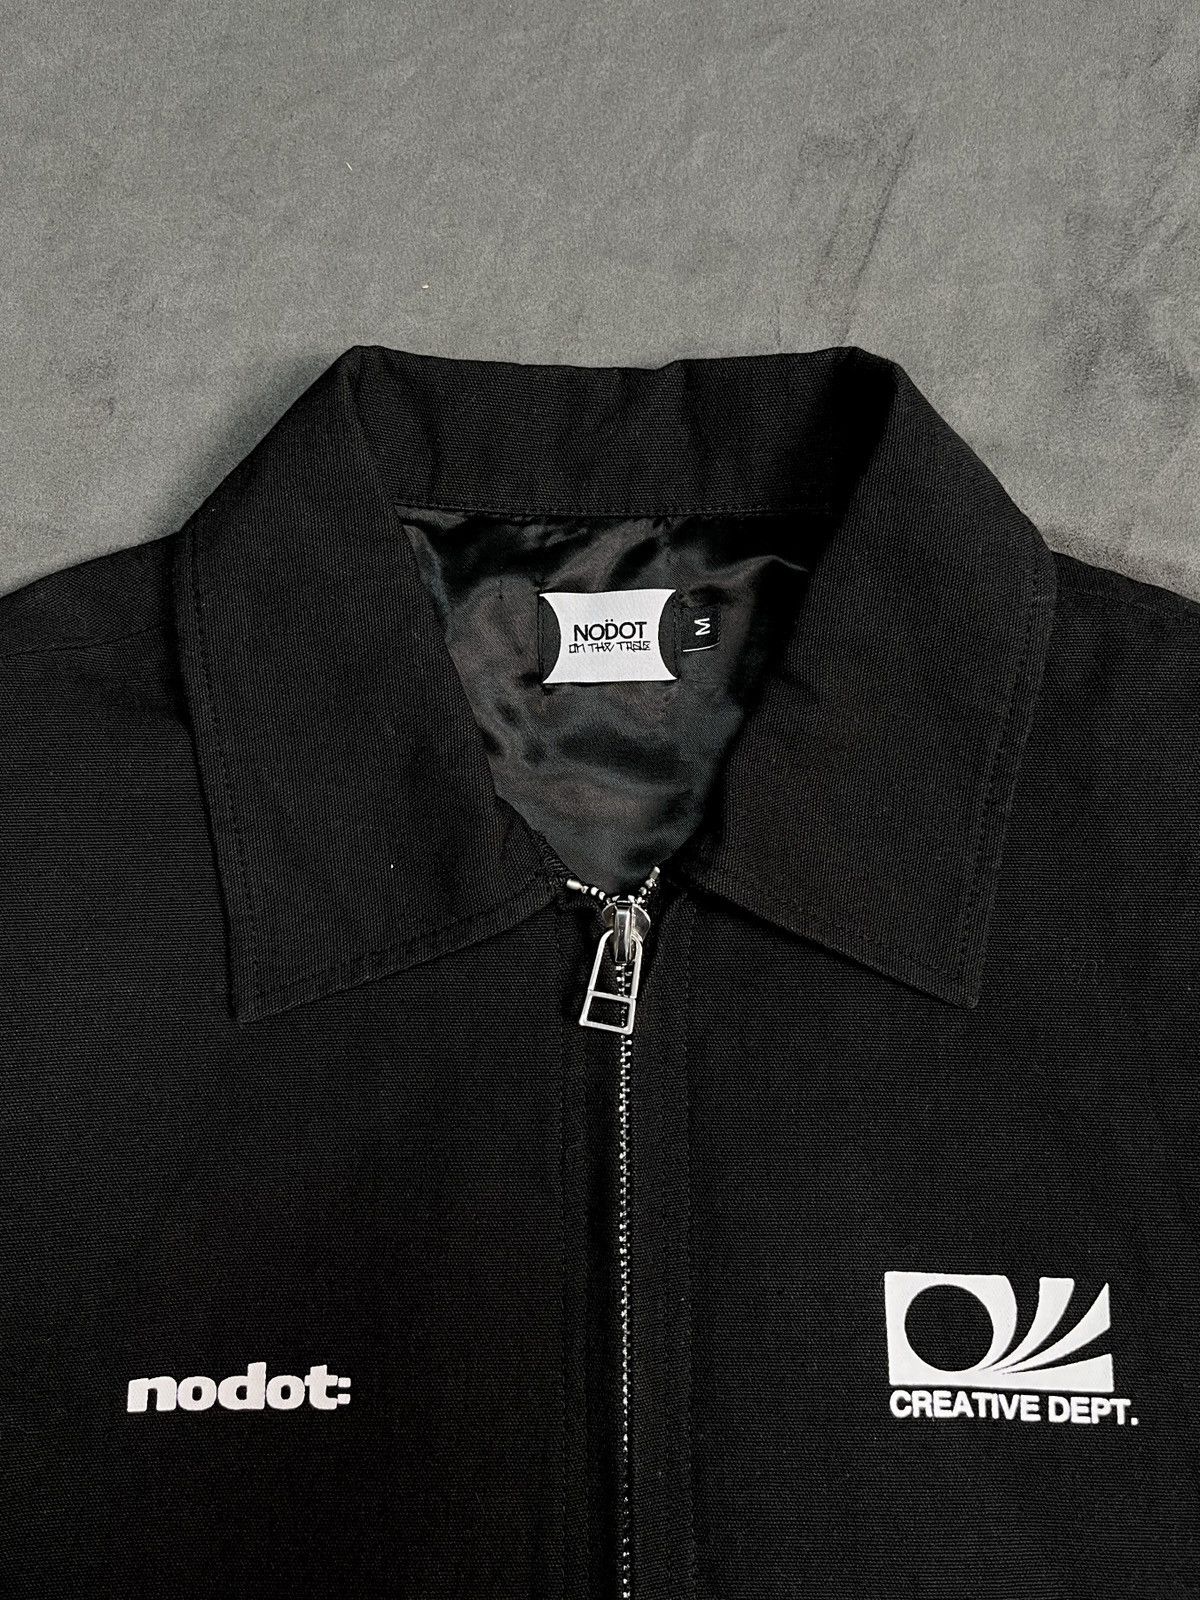 Hype - Nodot Y2k Two Way Zipper Black Workwear Jacket Medium - 2